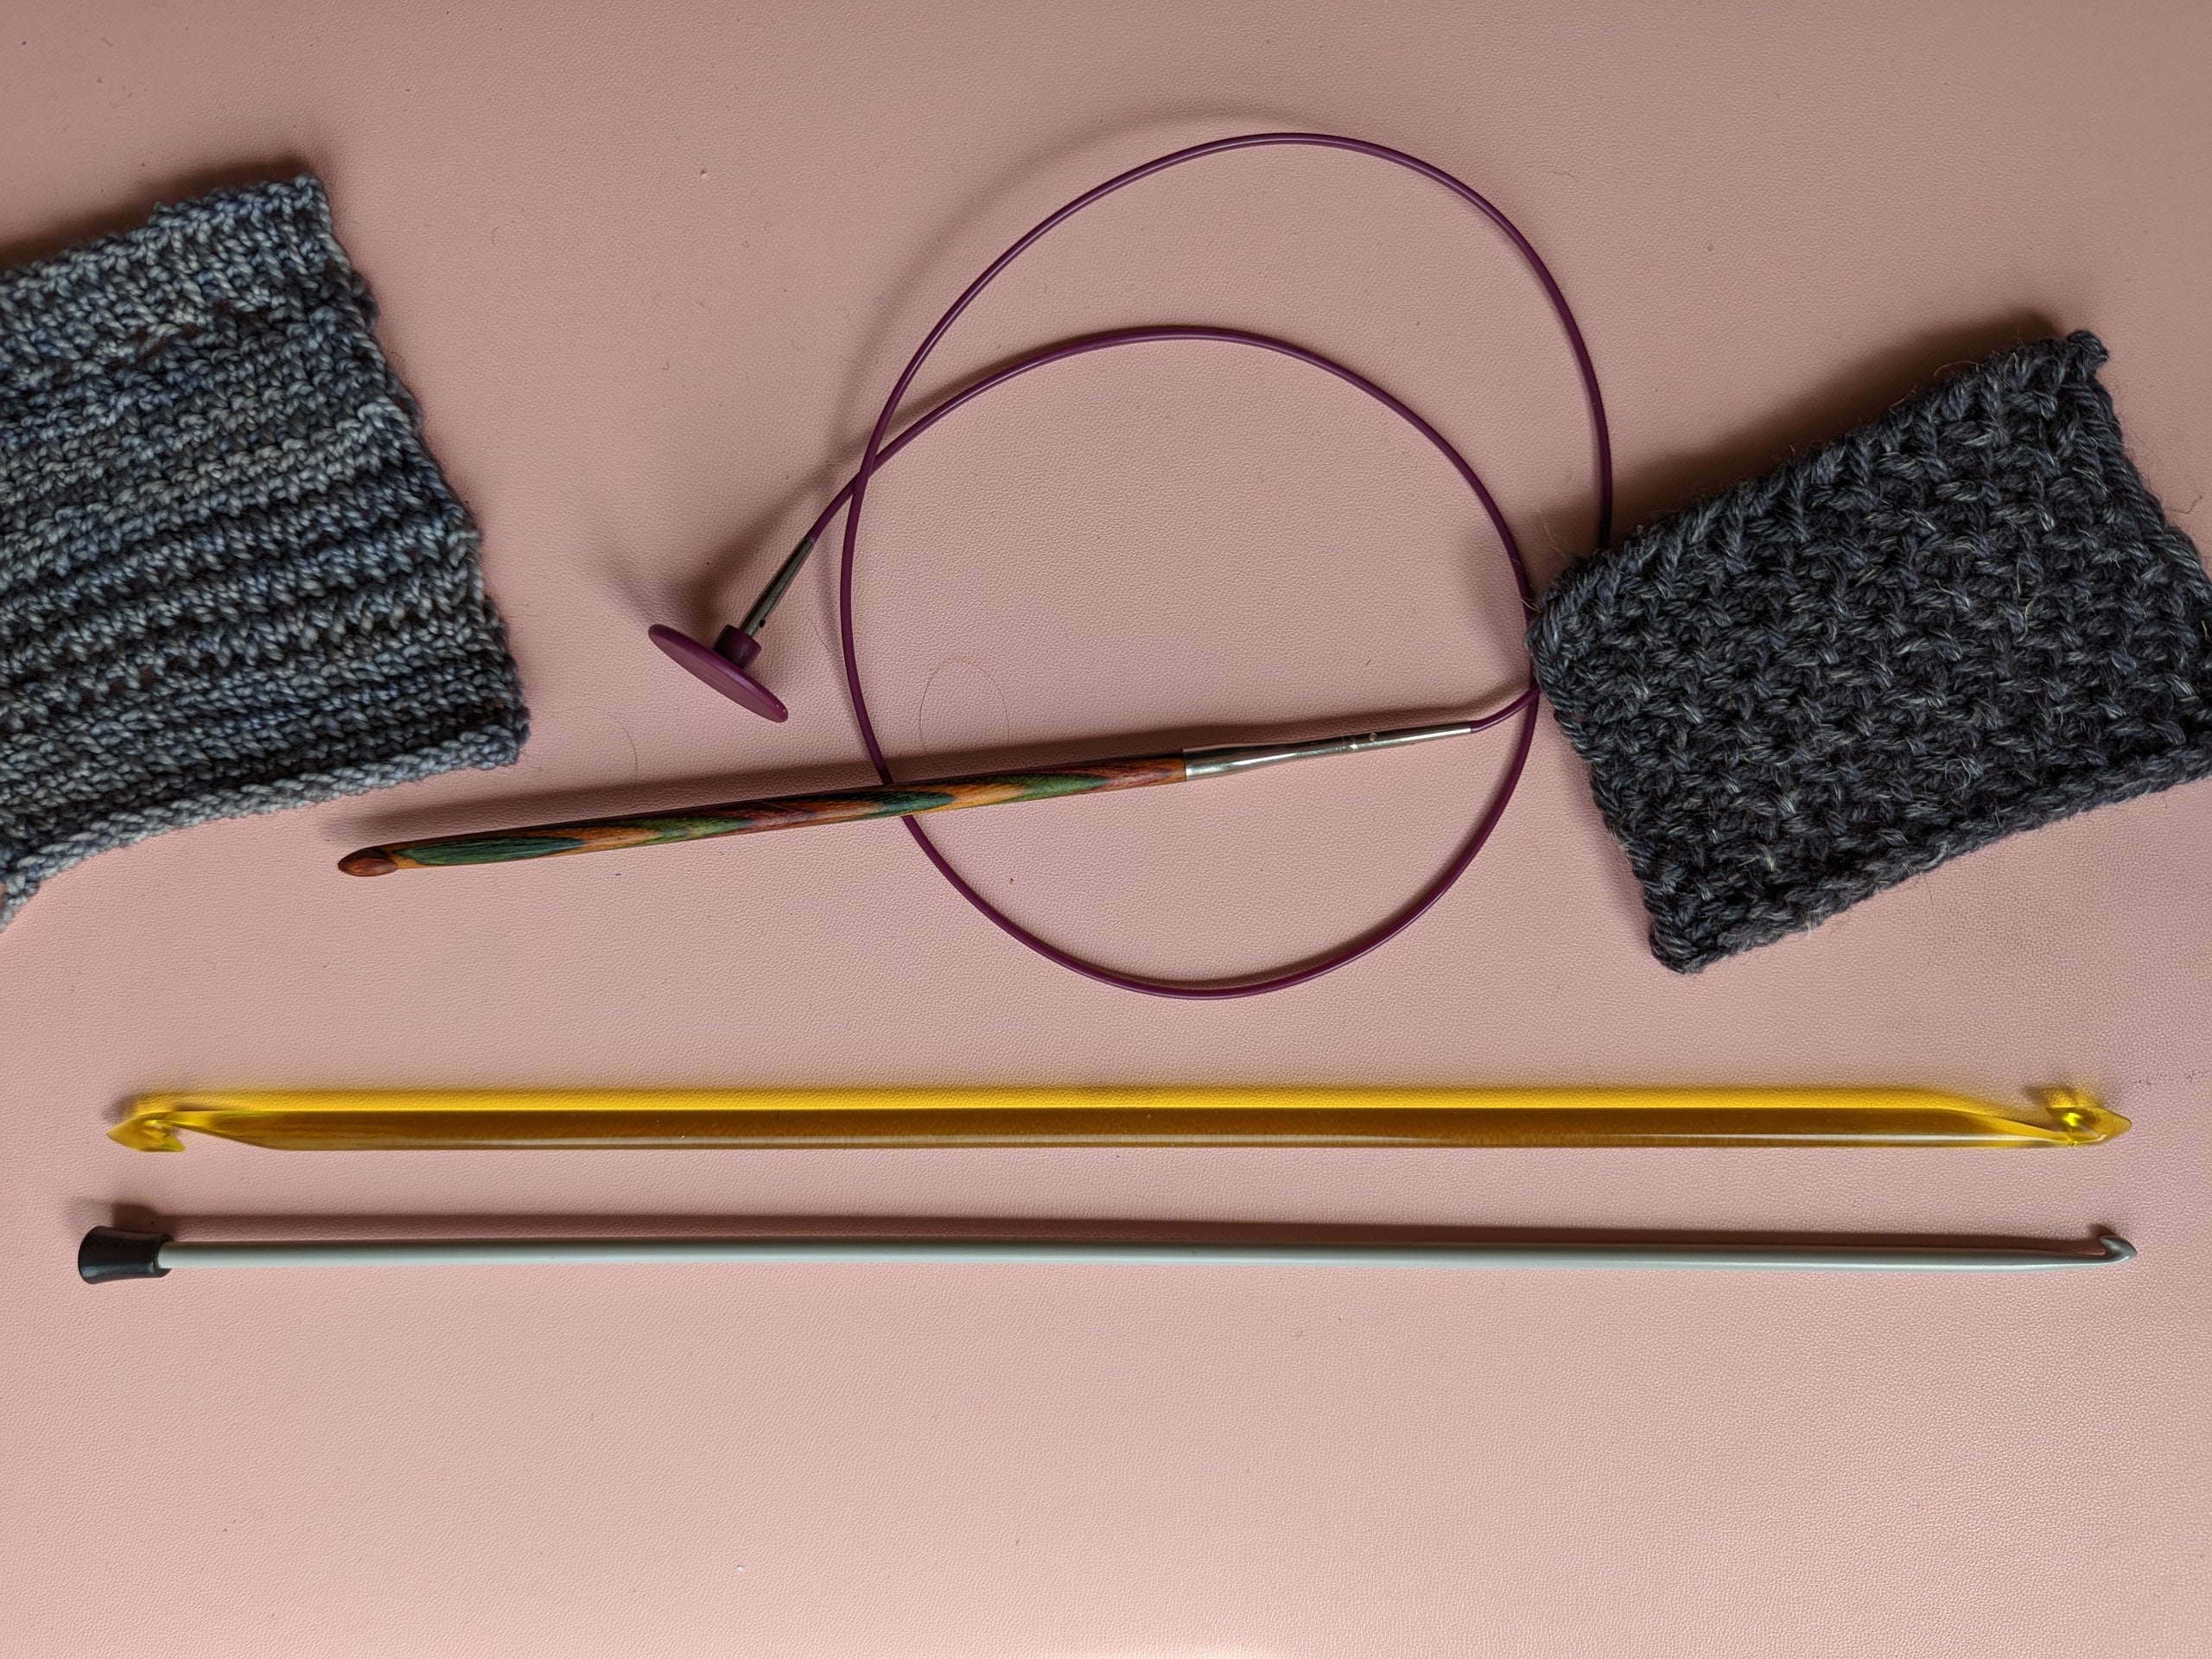 Choosing a Tunisian crochet hook